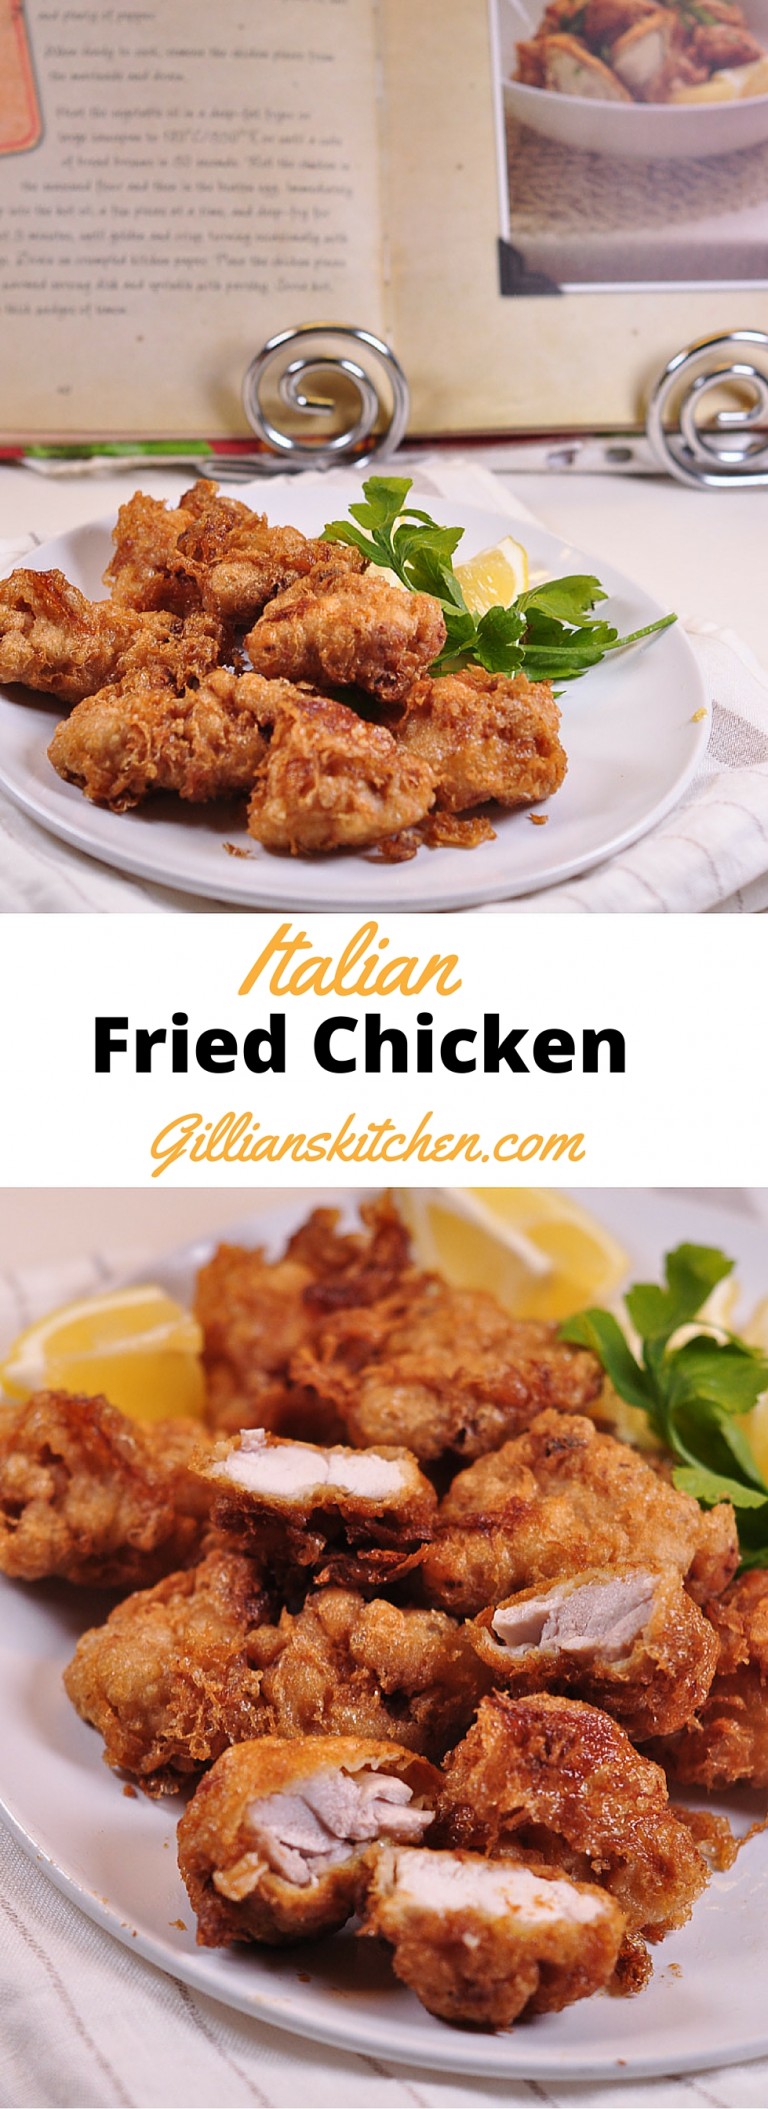 Italian Fried Chicken: Gillian's Kitchen, Simple, No Fuss, Everyday Recipes